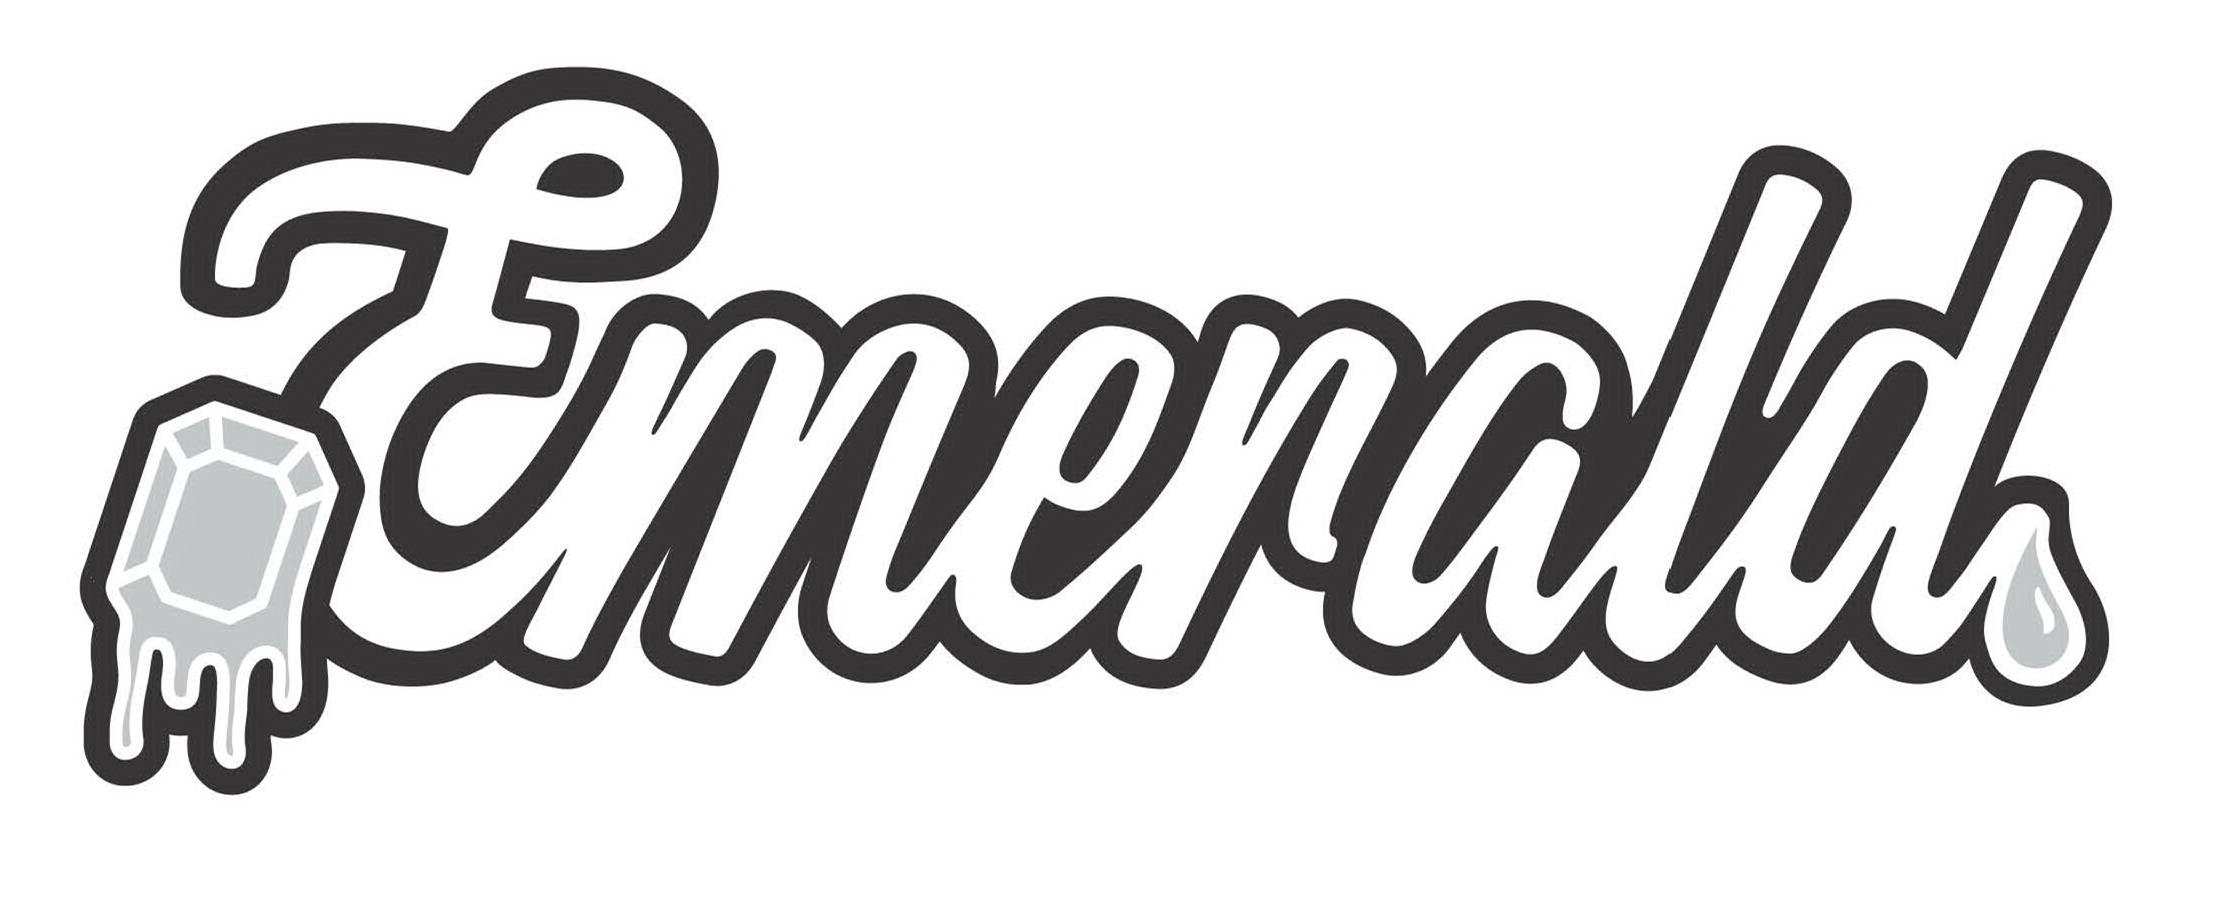 Trademark Logo EMERALD